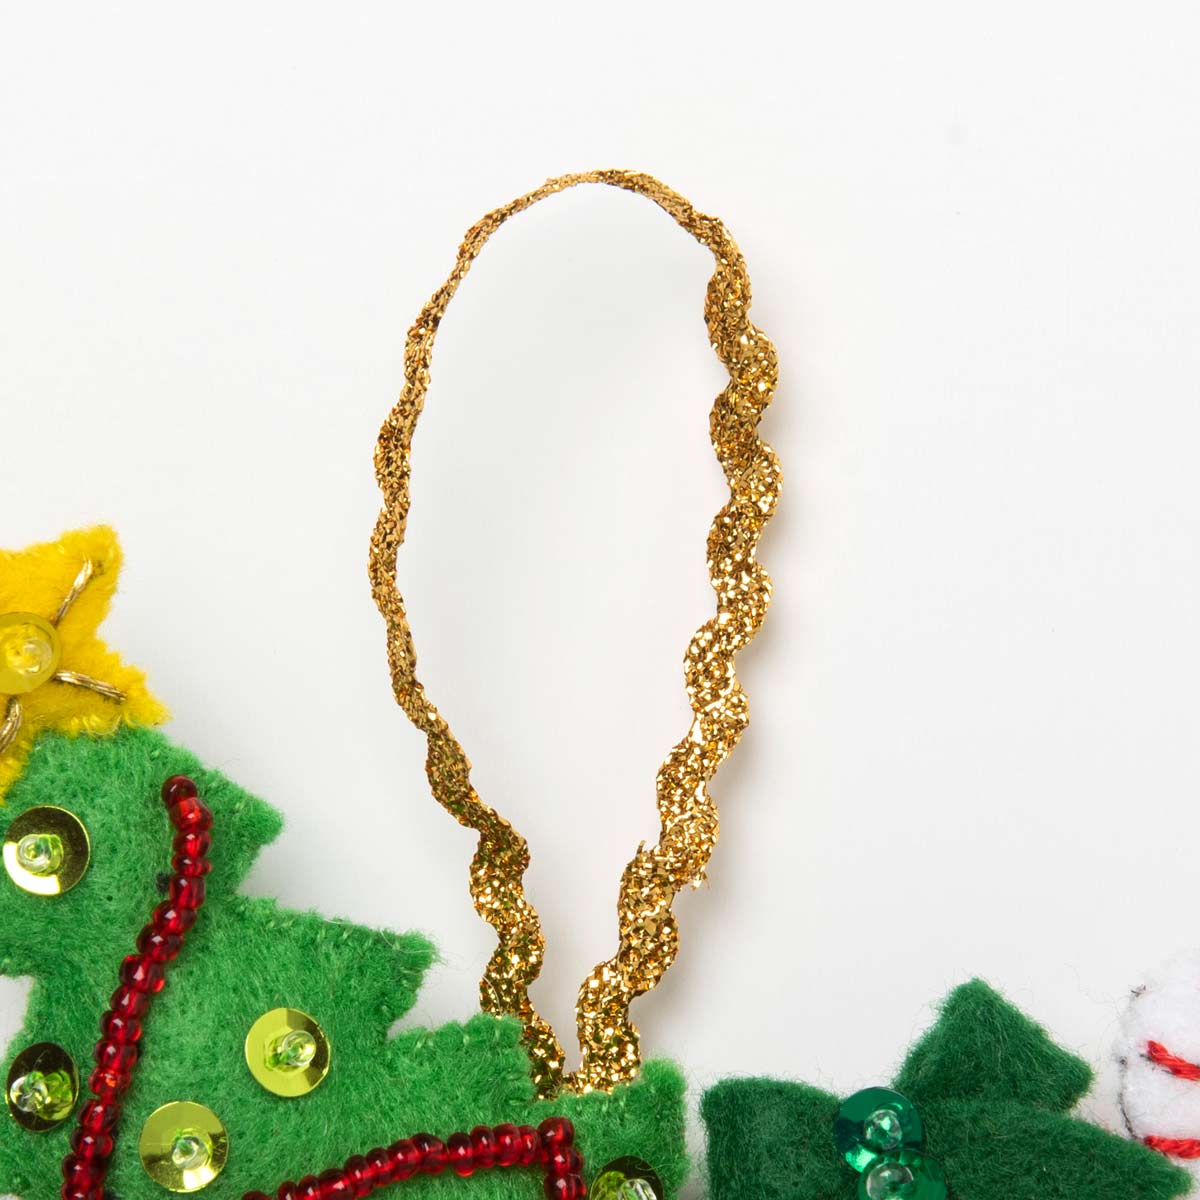 Bucilla ® Seasonal - Felt - Ornament Kits - Santa's Grand Sleigh - 89055E